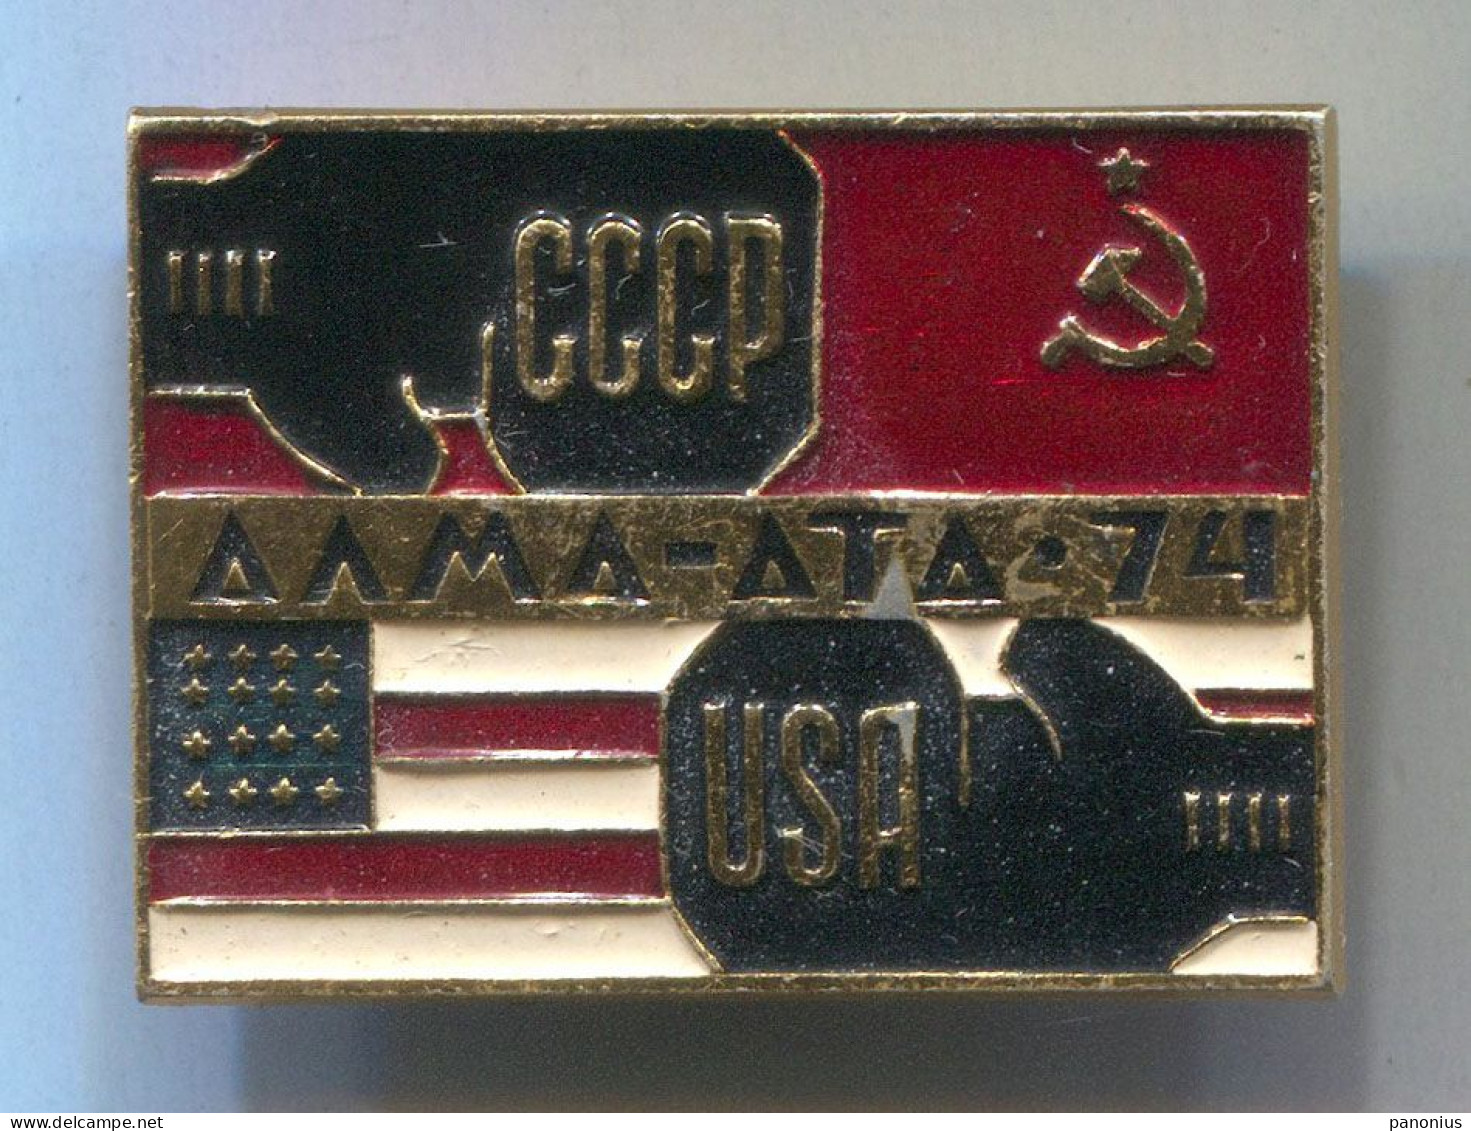 Boxing Box Boxen Pugilato - Alma - Ata Kazakhstan 1974. USSR Russia Vs USA, Vintage  Pin  Badge  Abzeichen - Boksen